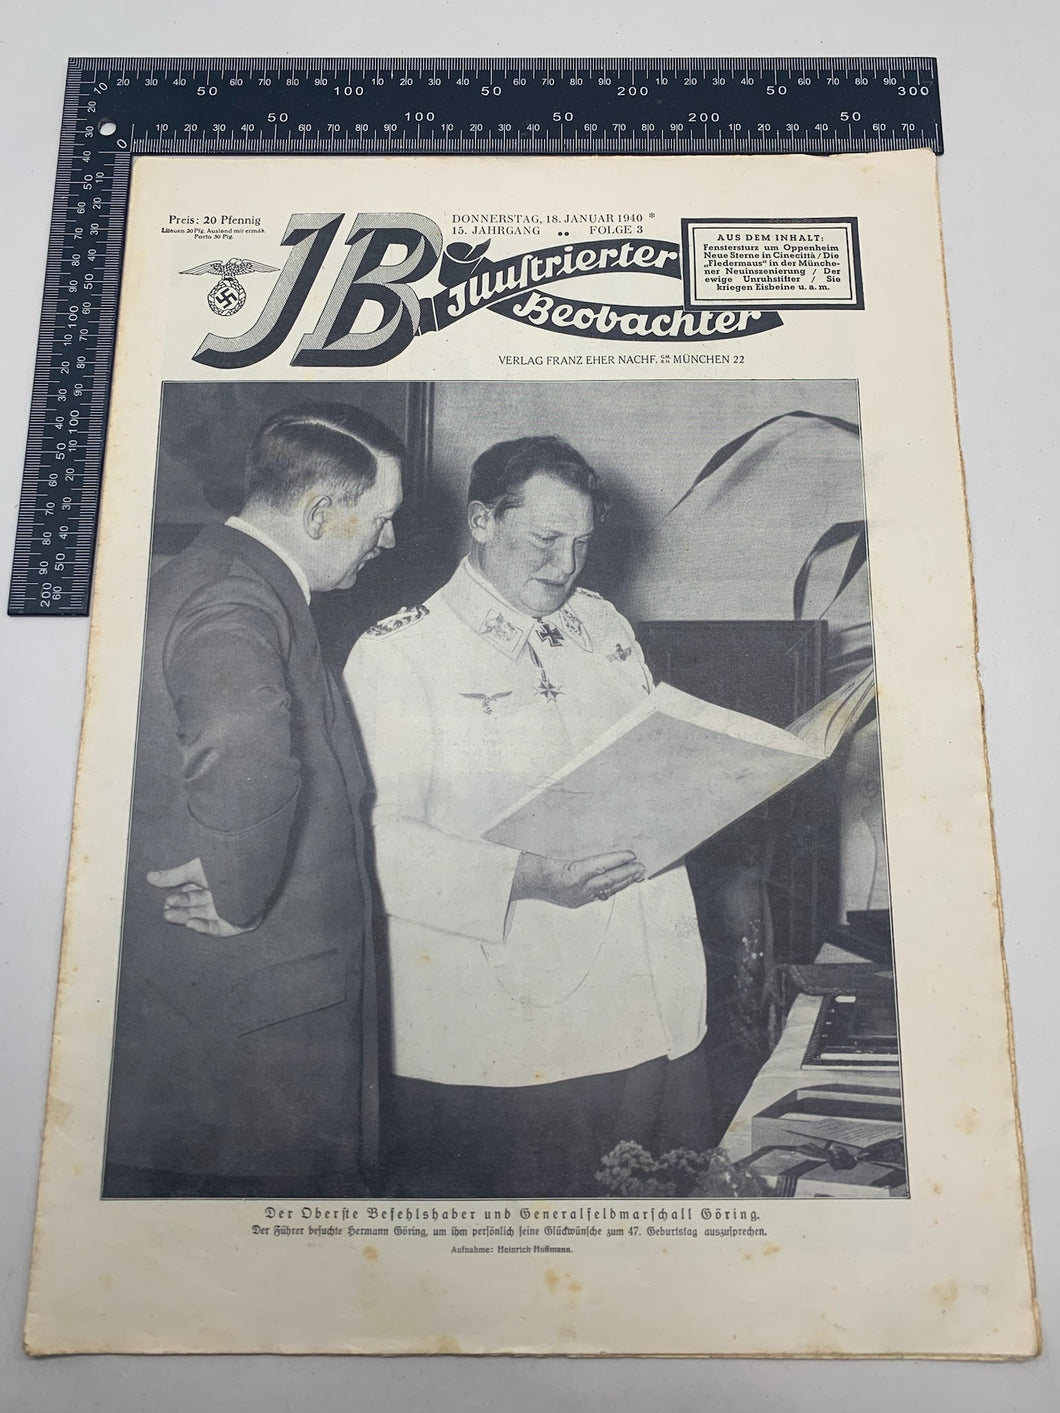 JB Juustrierter Beobachter NSDAP Magazine Original WW2 German - 18th January 1940